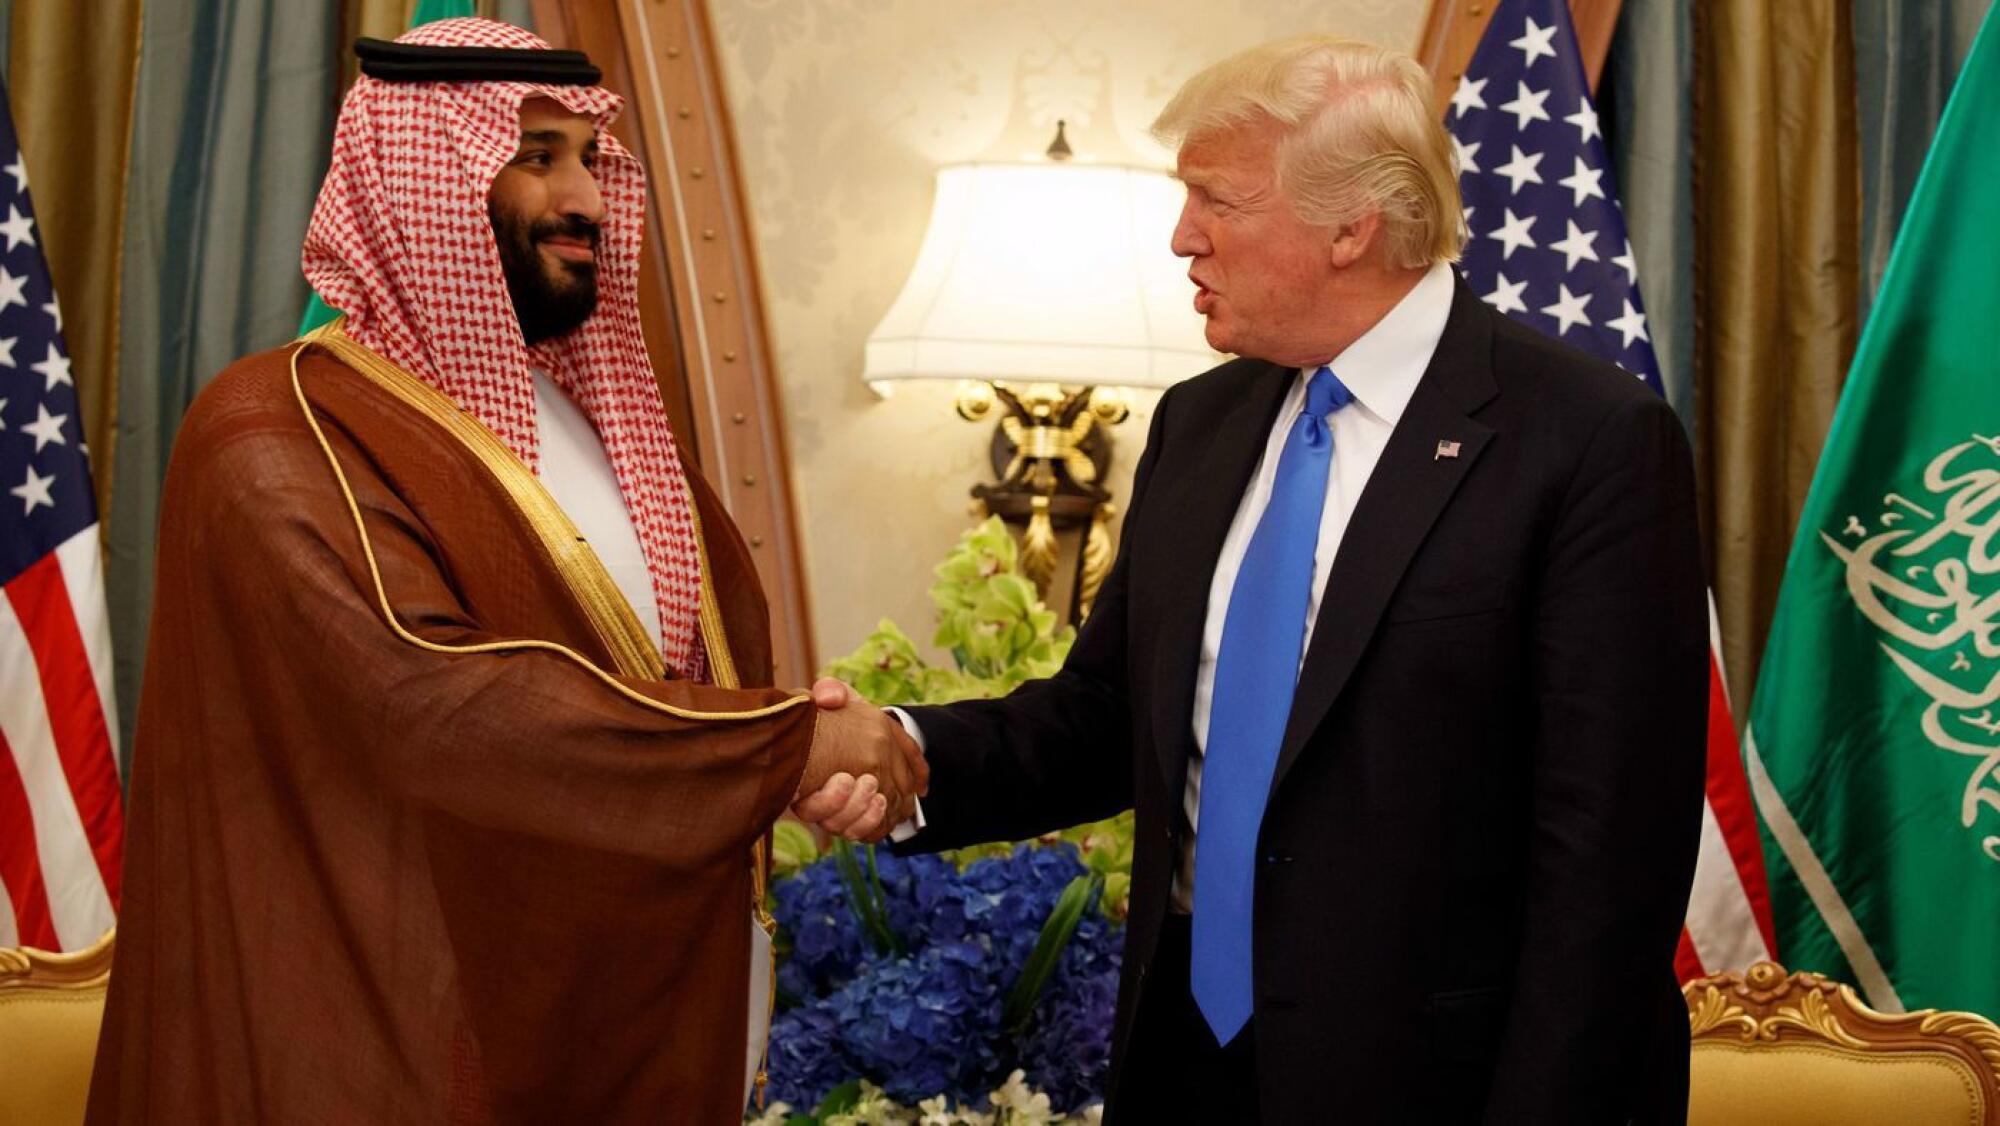 President Trump meets with Saudi Crown Prince Mohammed bin Salman